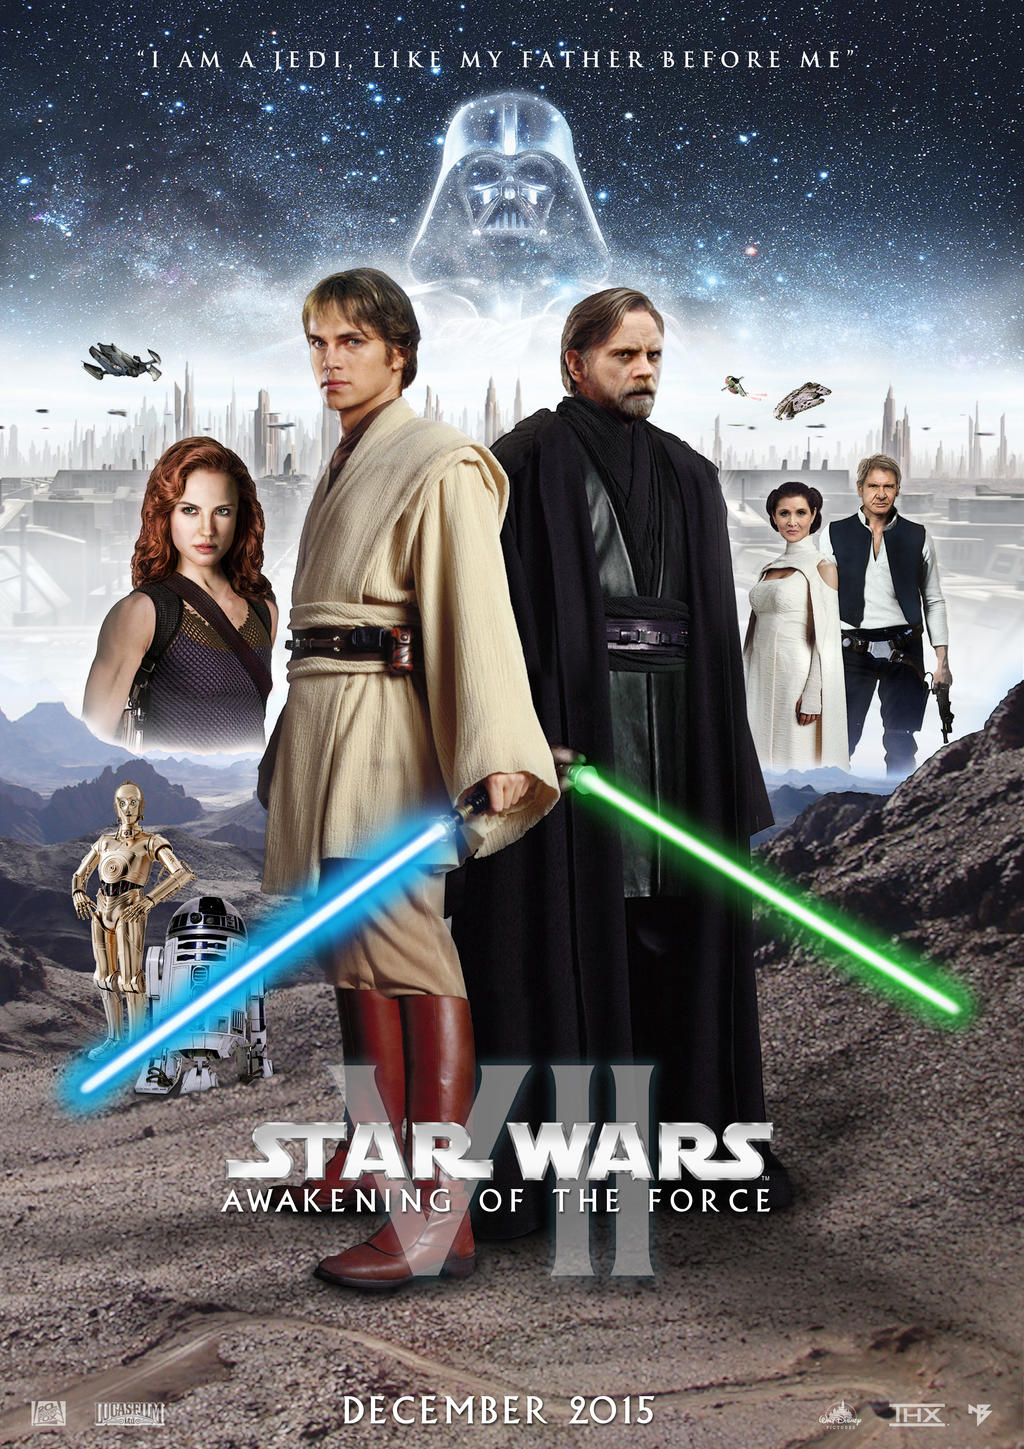 schroot Inschrijven Open Star Wars Episode VII Teaser Poster by nei1b on DeviantArt